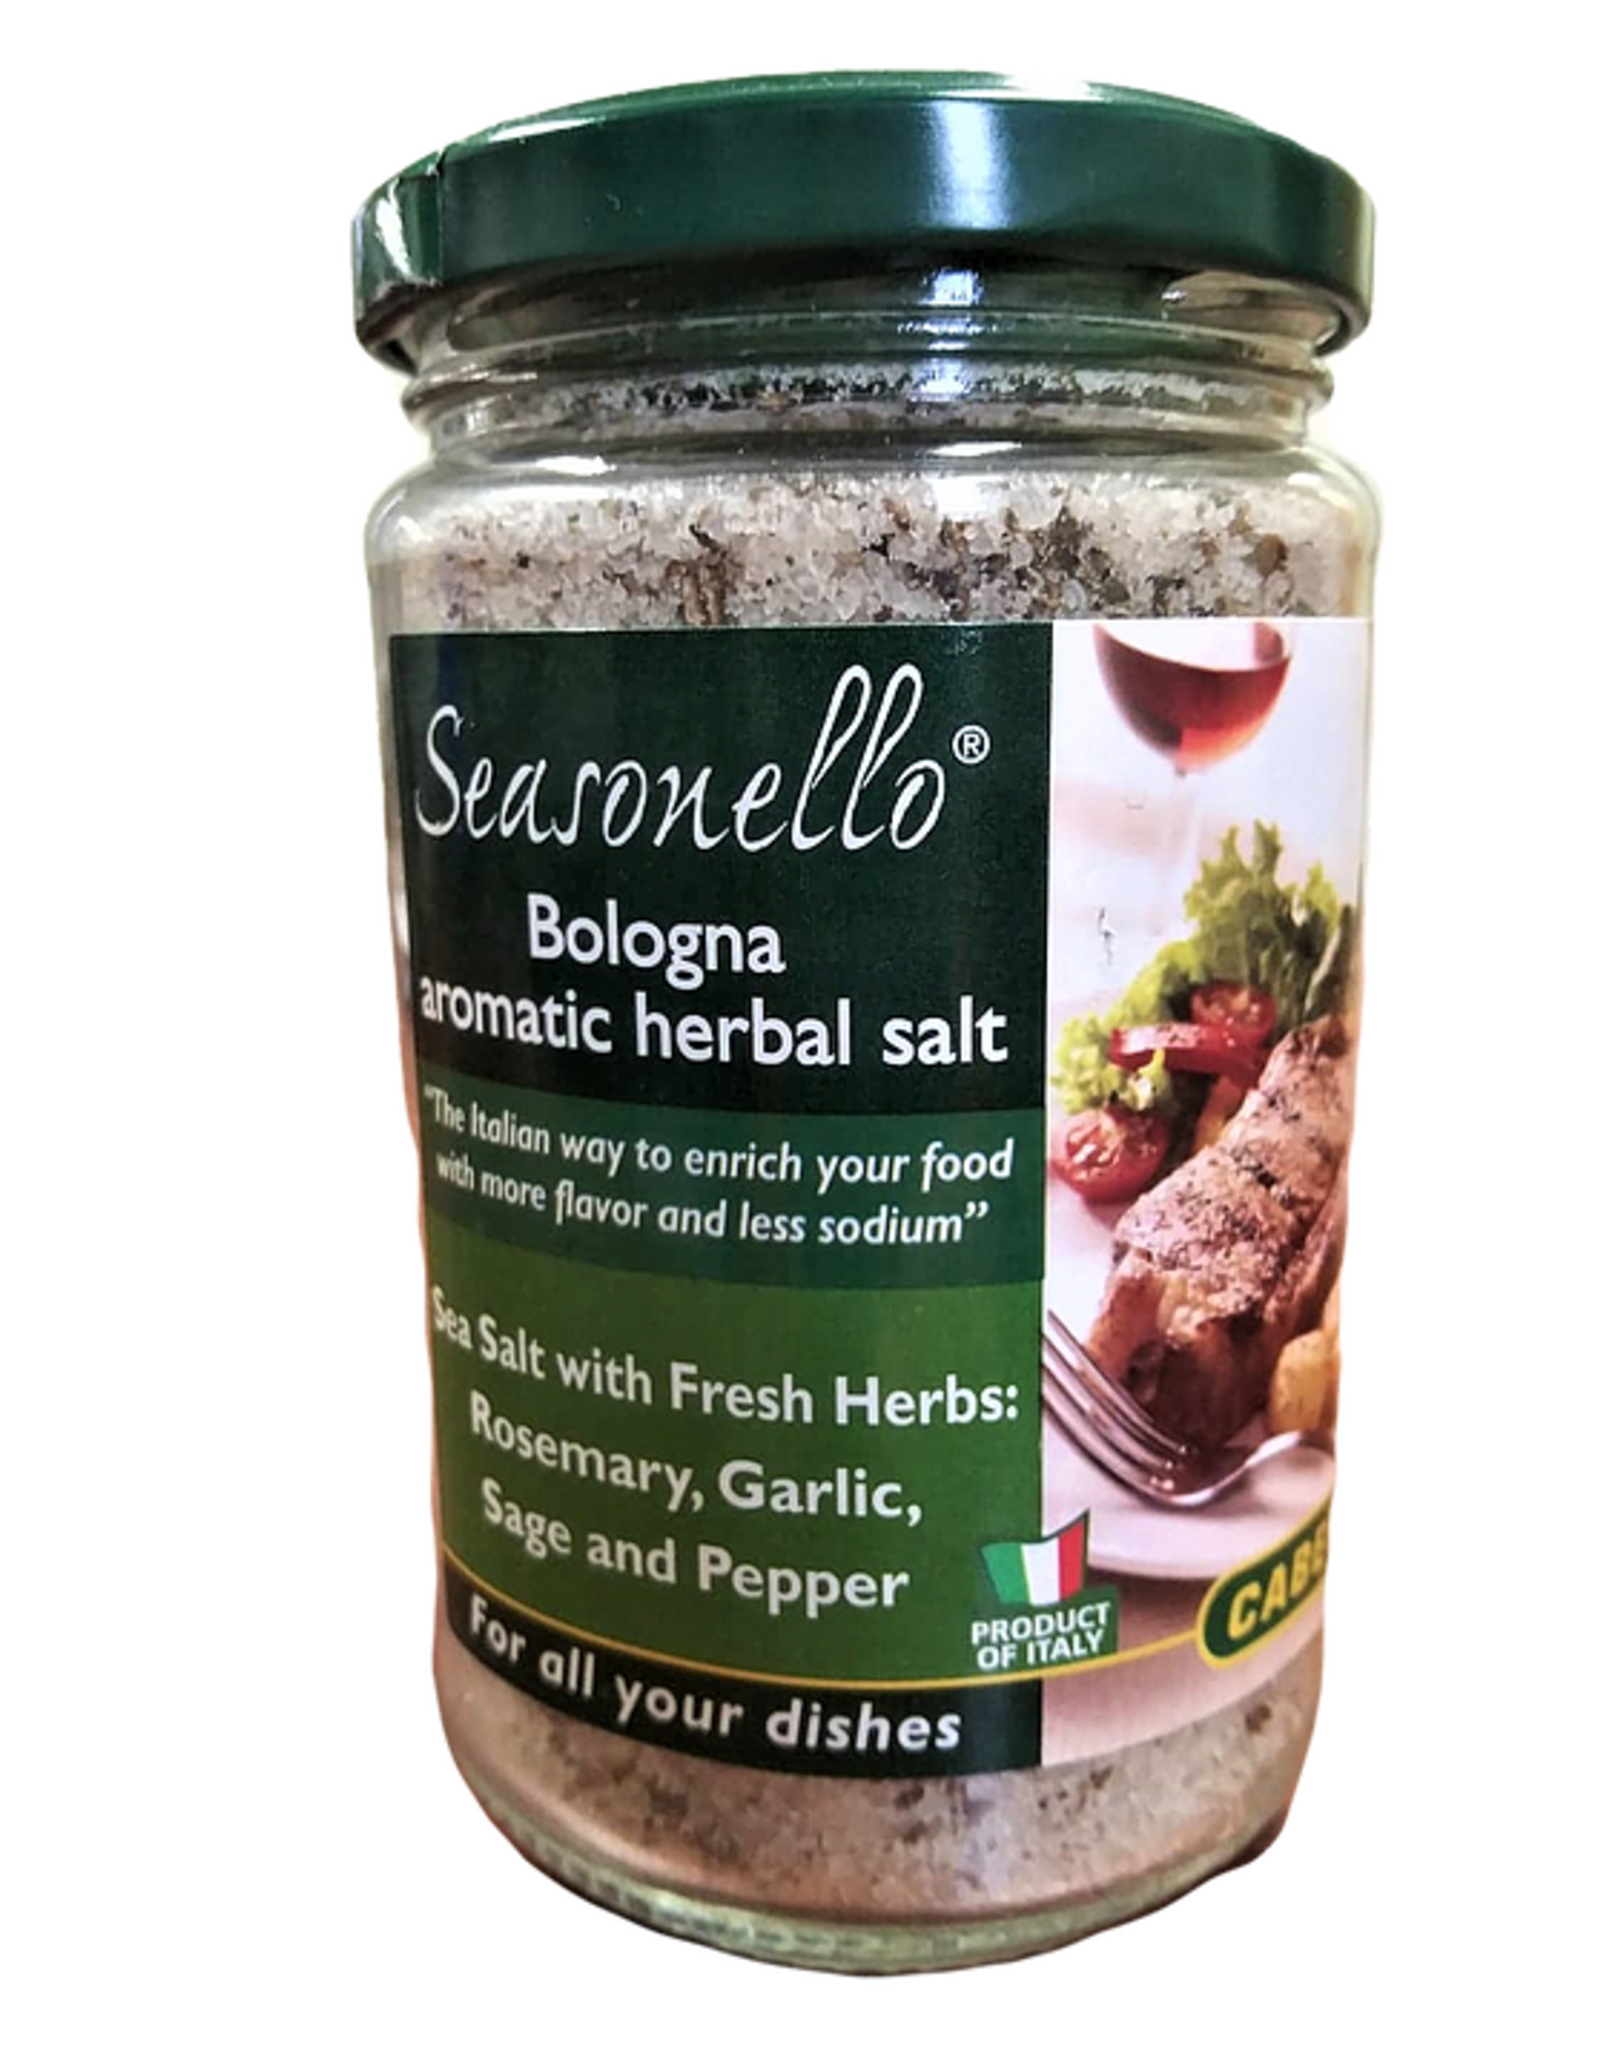 Seasonello Aromatic Herbal Salt